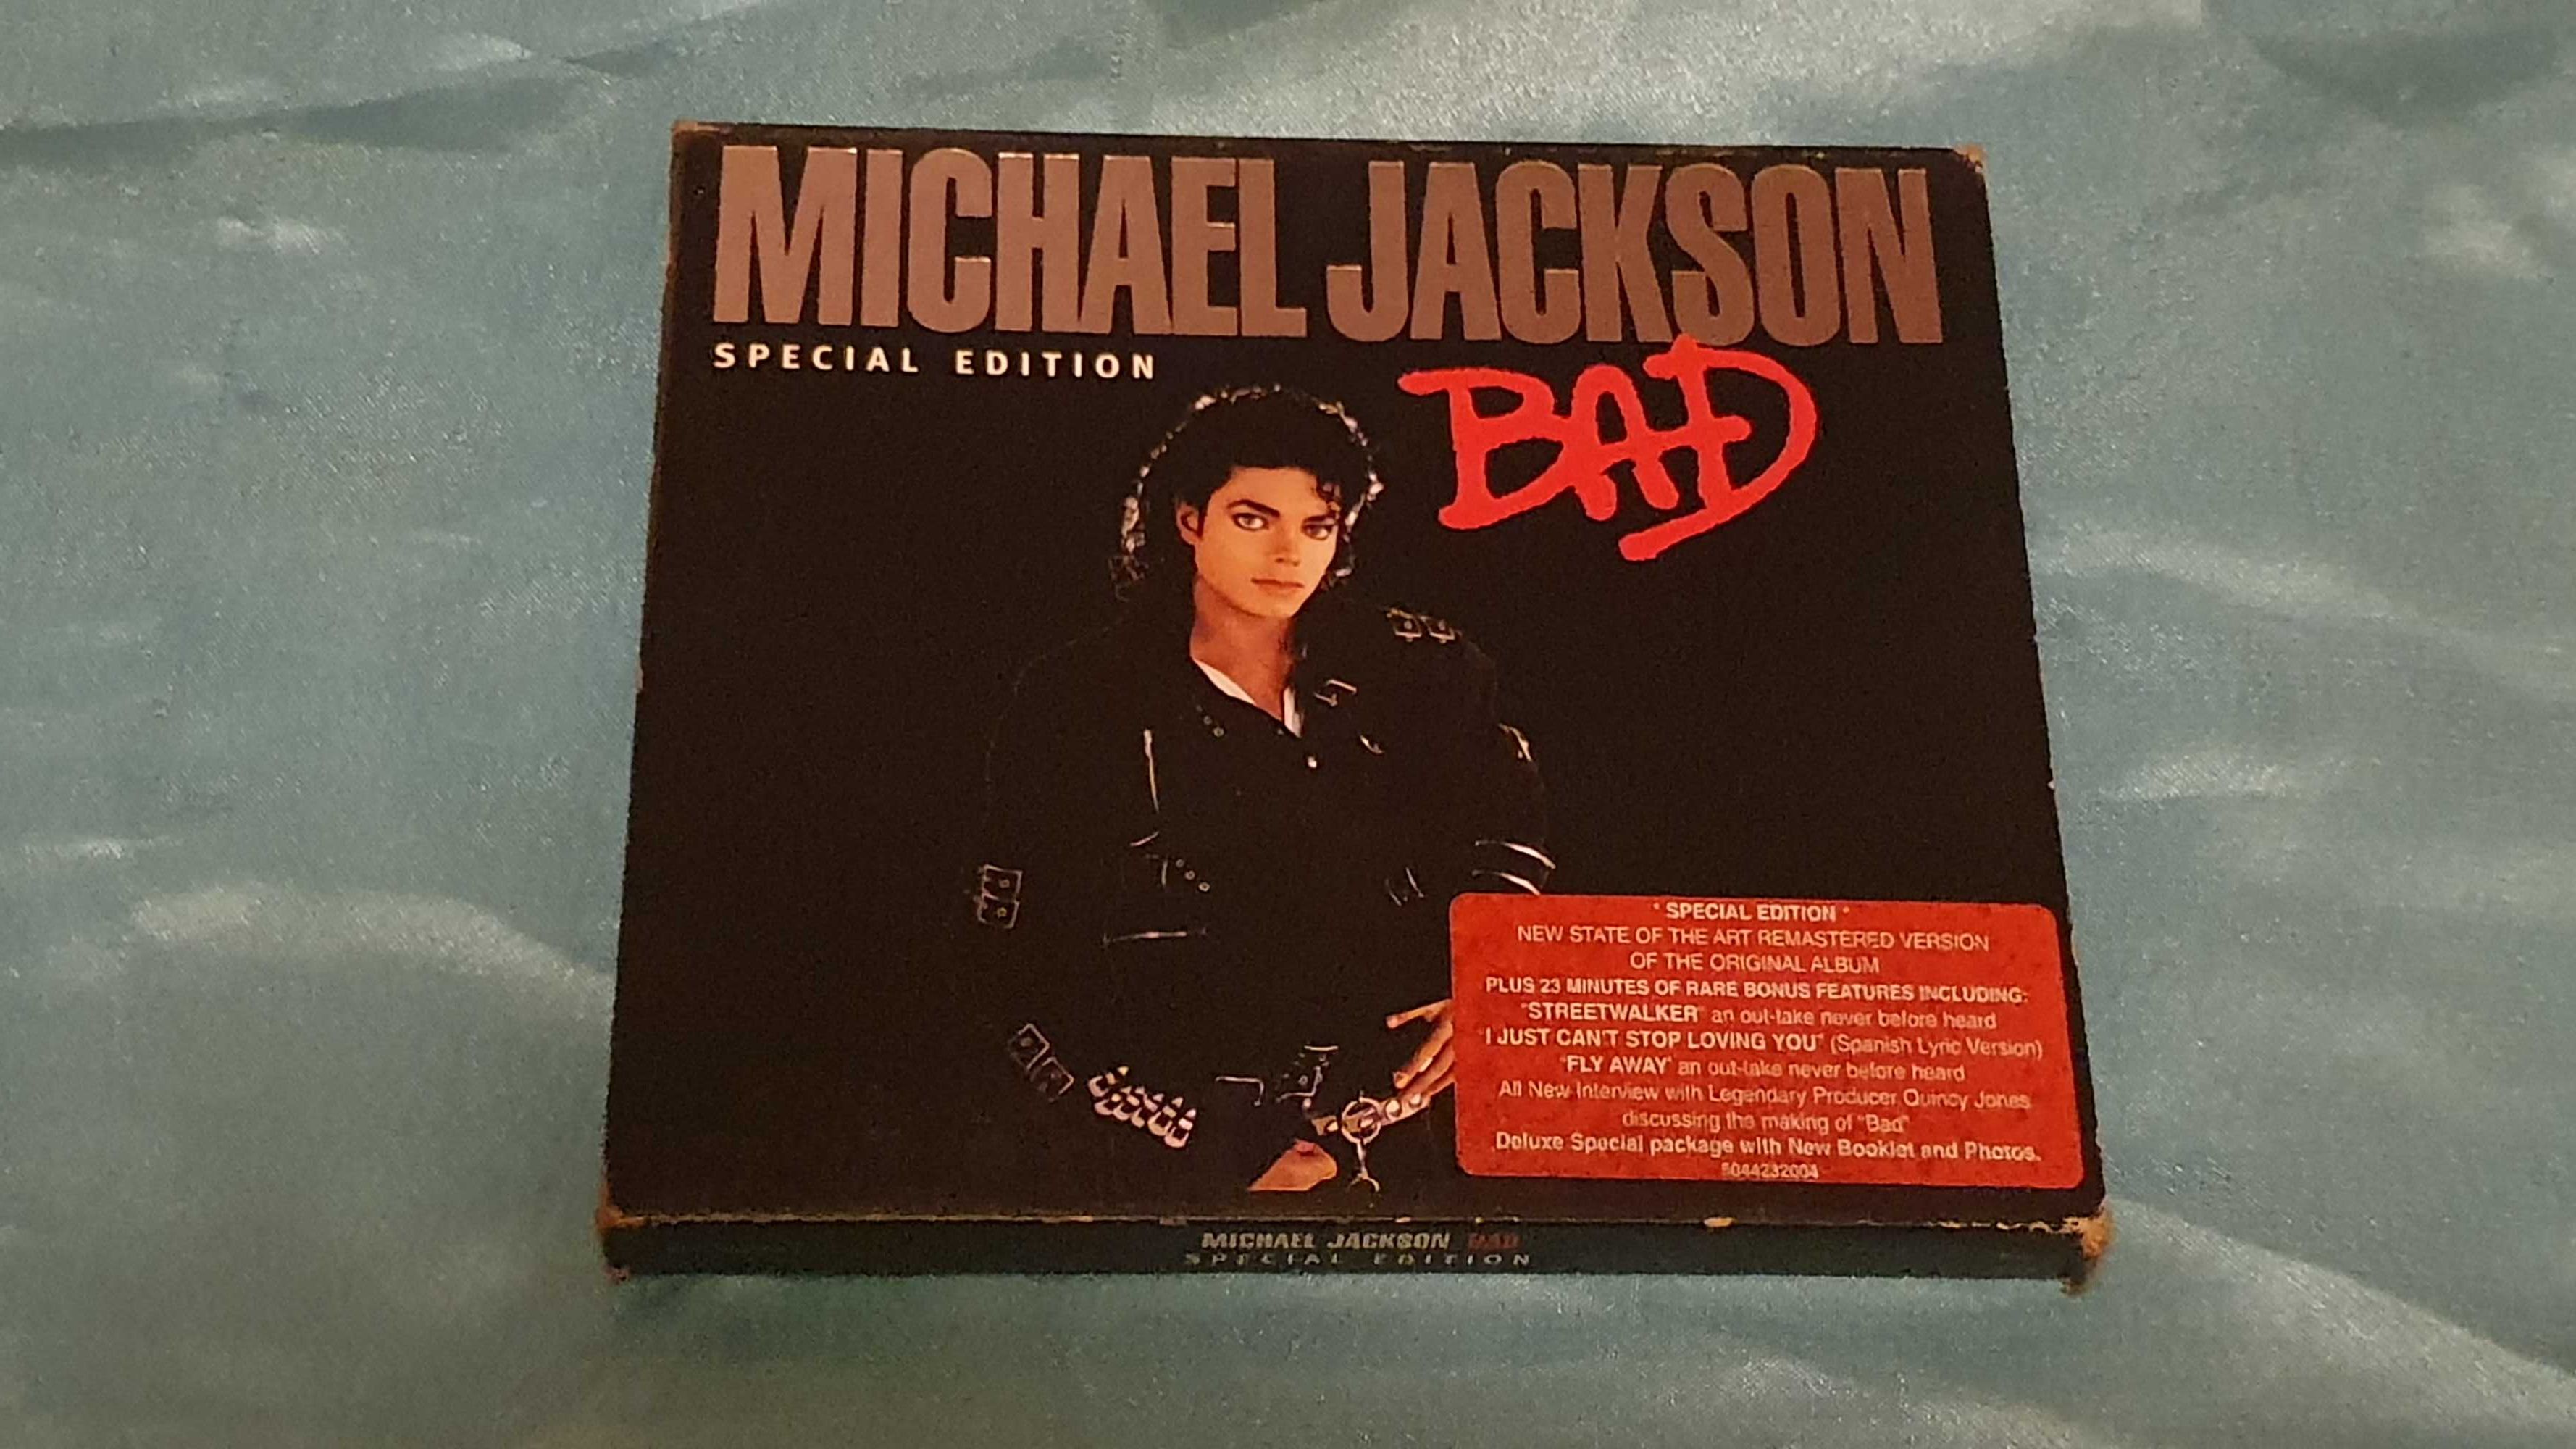 Michael Jackson BAD  special edition